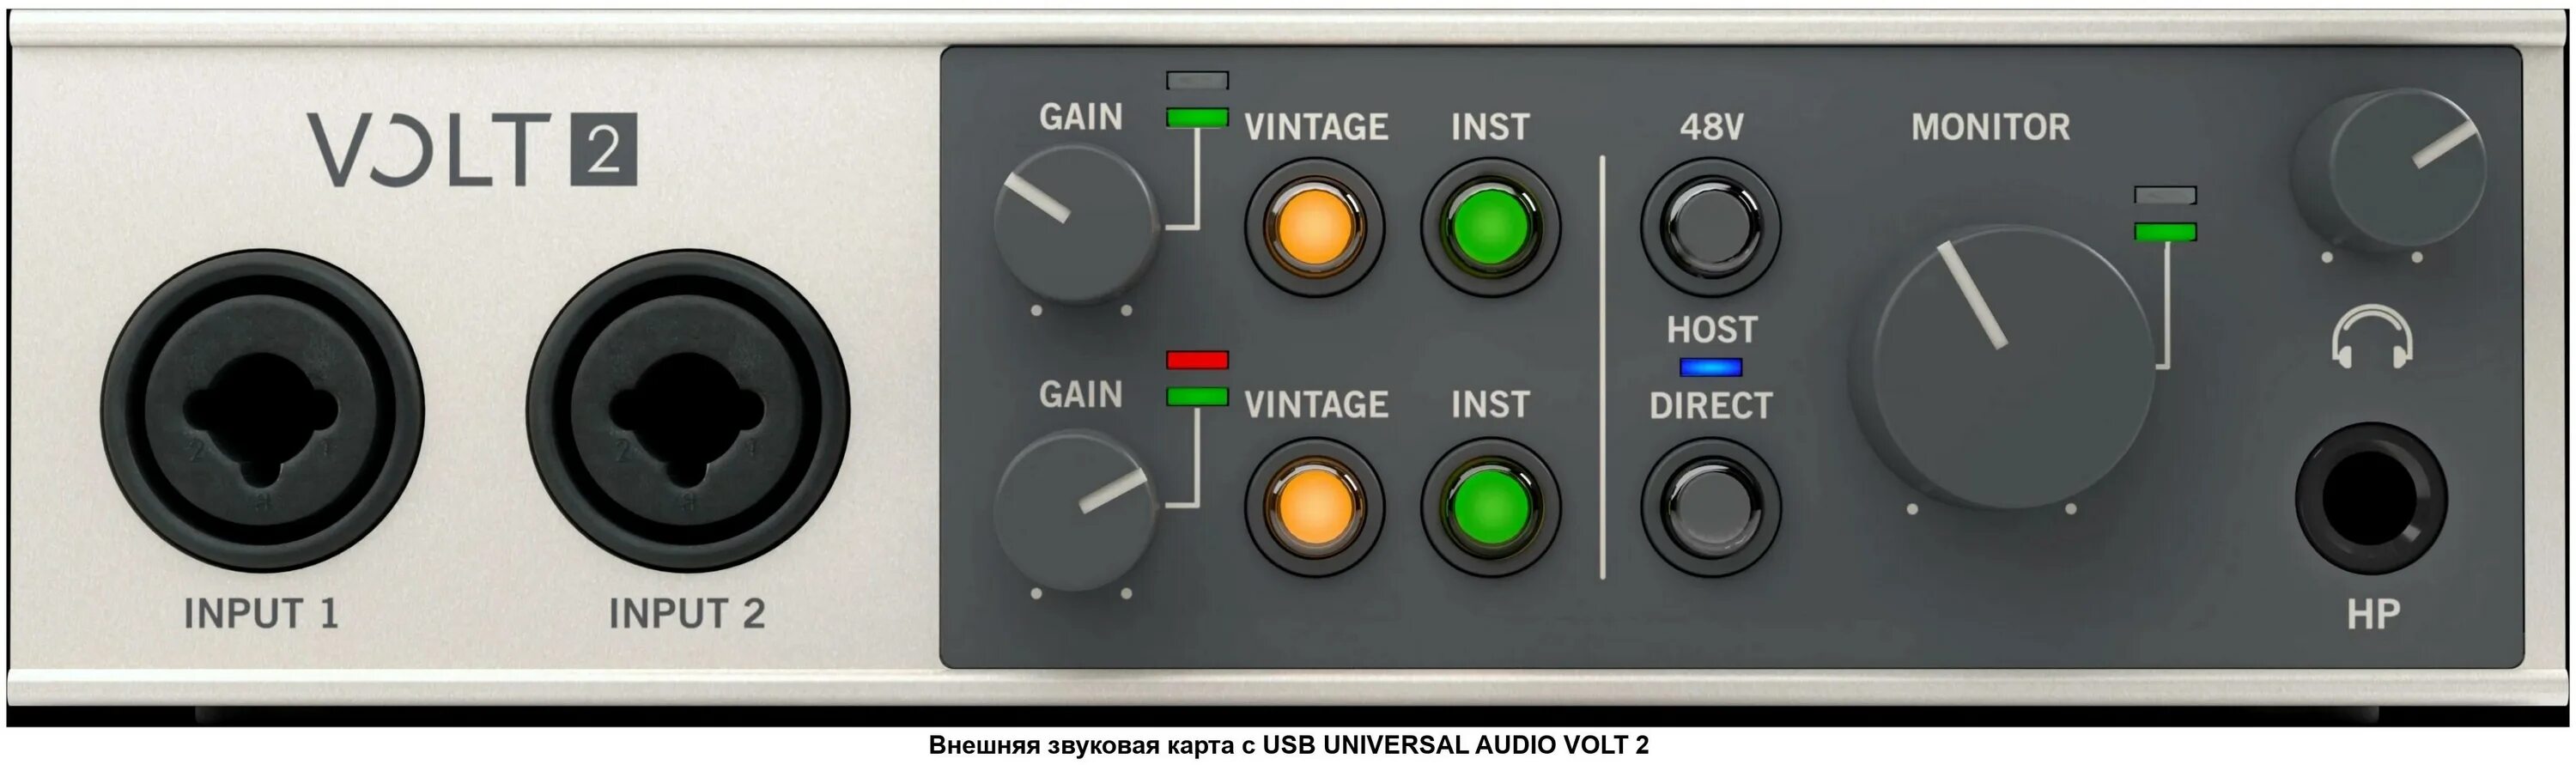 Universal Audio Volt 2. Universal Audio Volt 4. Universal Audio Volt 1. Аудиокарта Universal Audio Volt 1. Volt звуковая